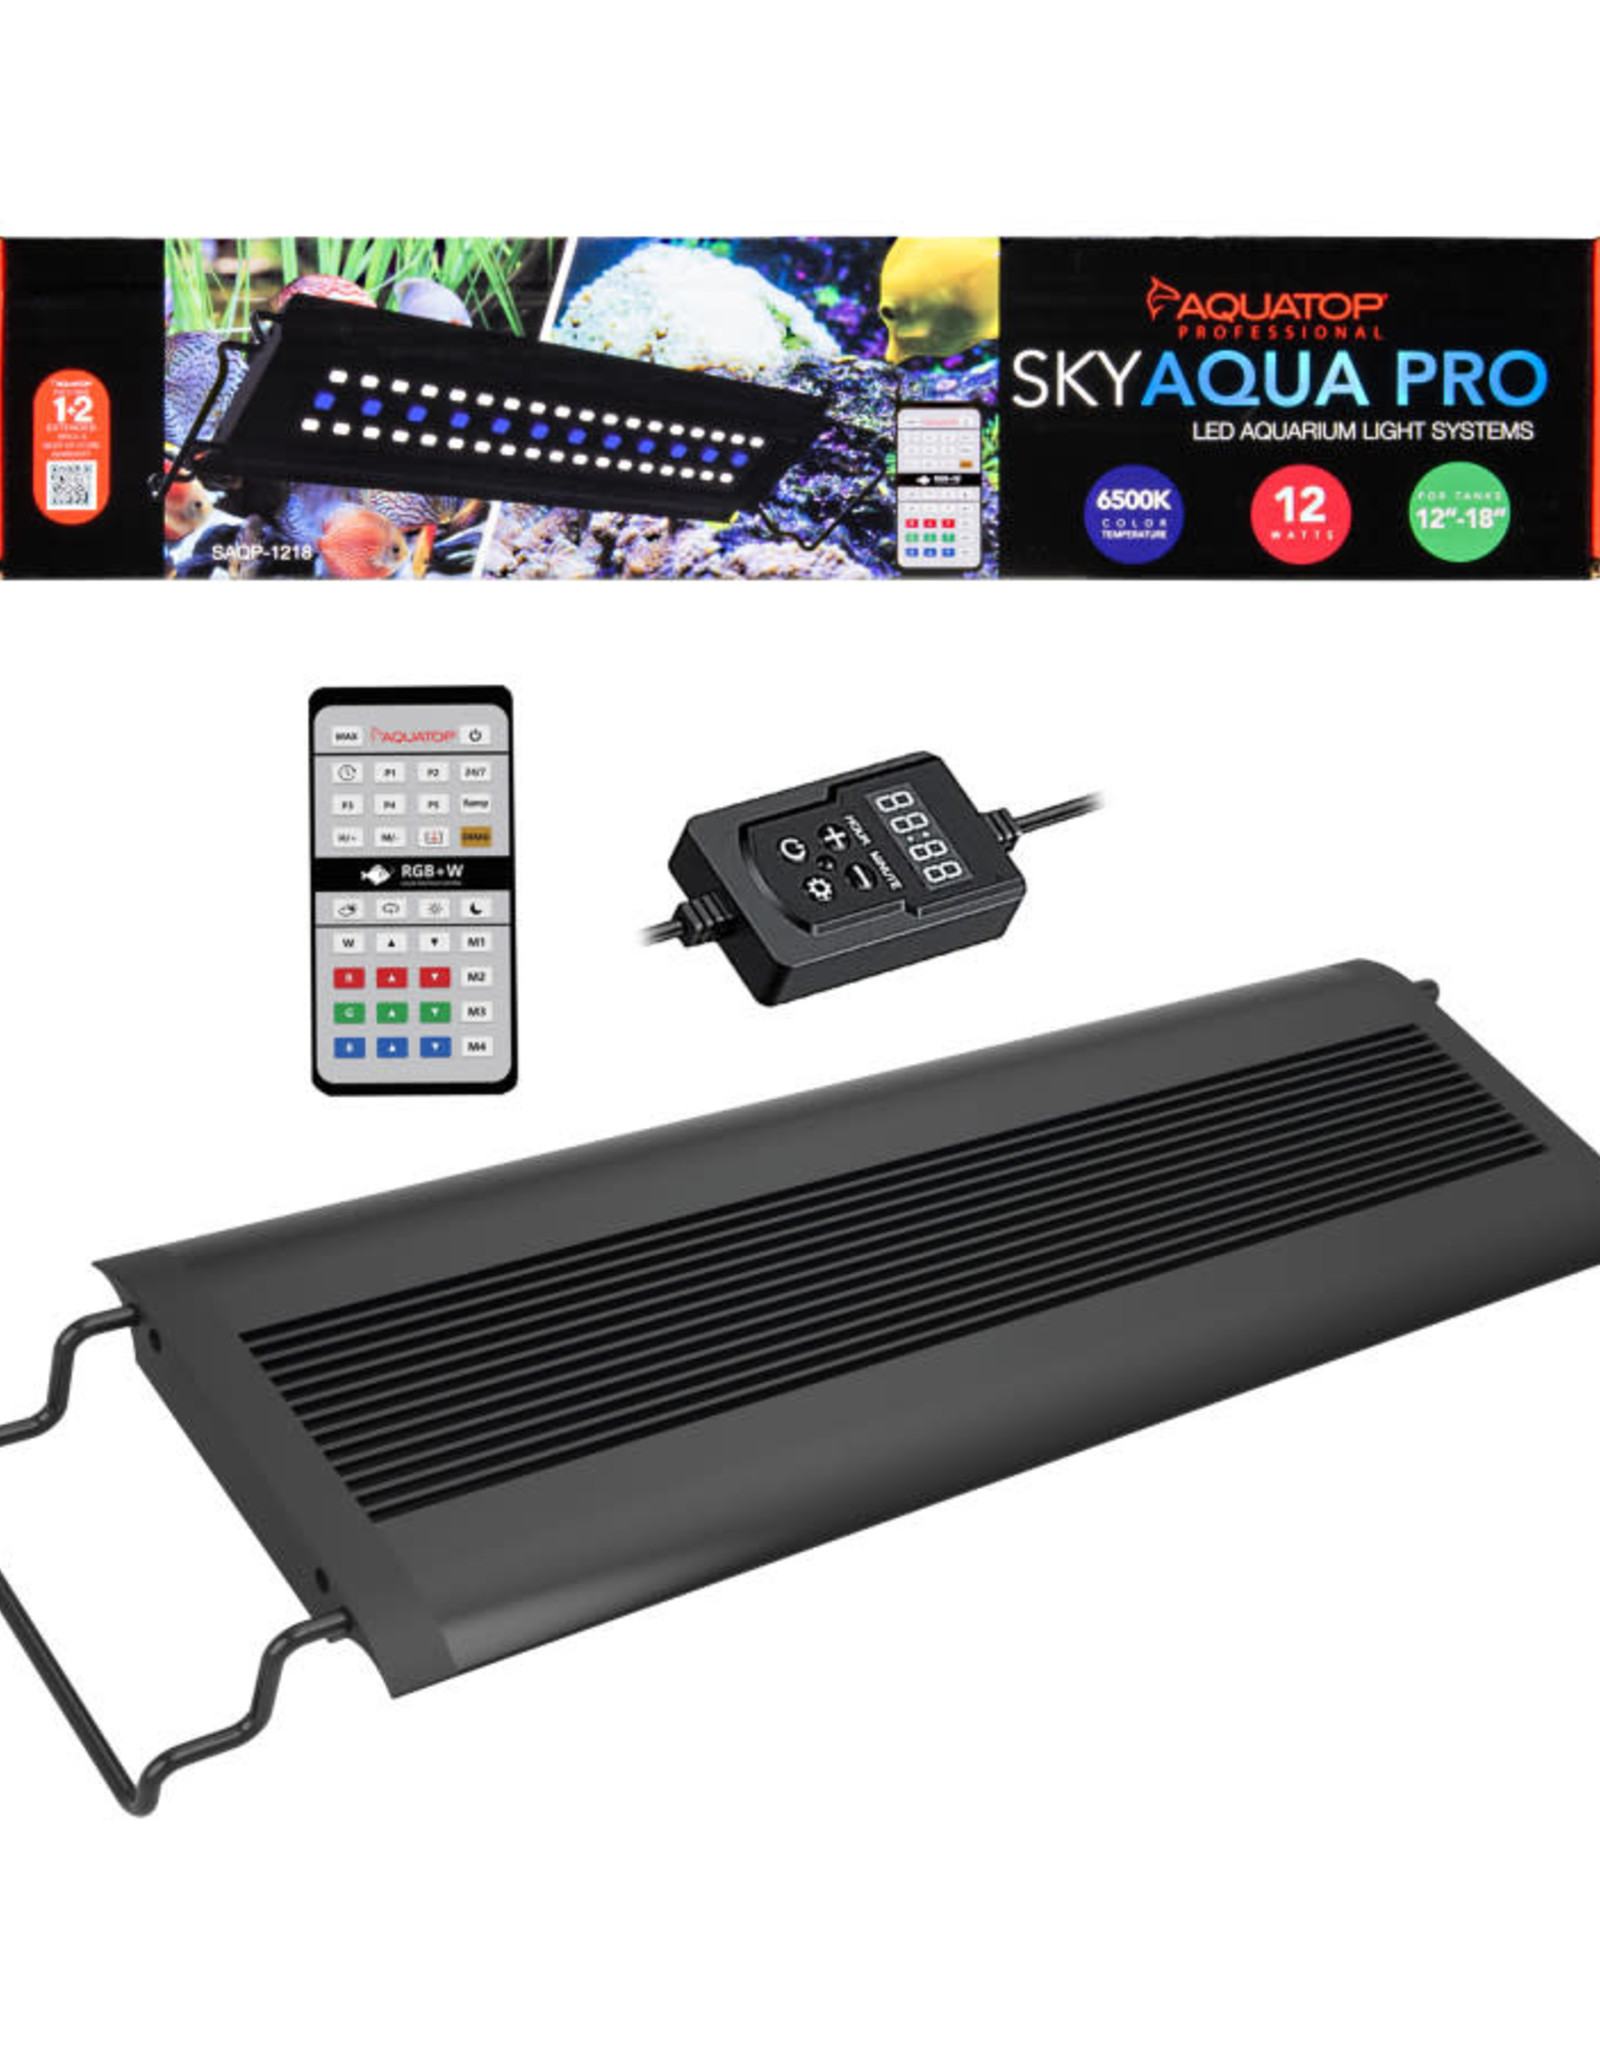 AQUATOP Aquatop SkyAqua Pro LED Light Fixture with IR Remote 6500K 12W 12-18in